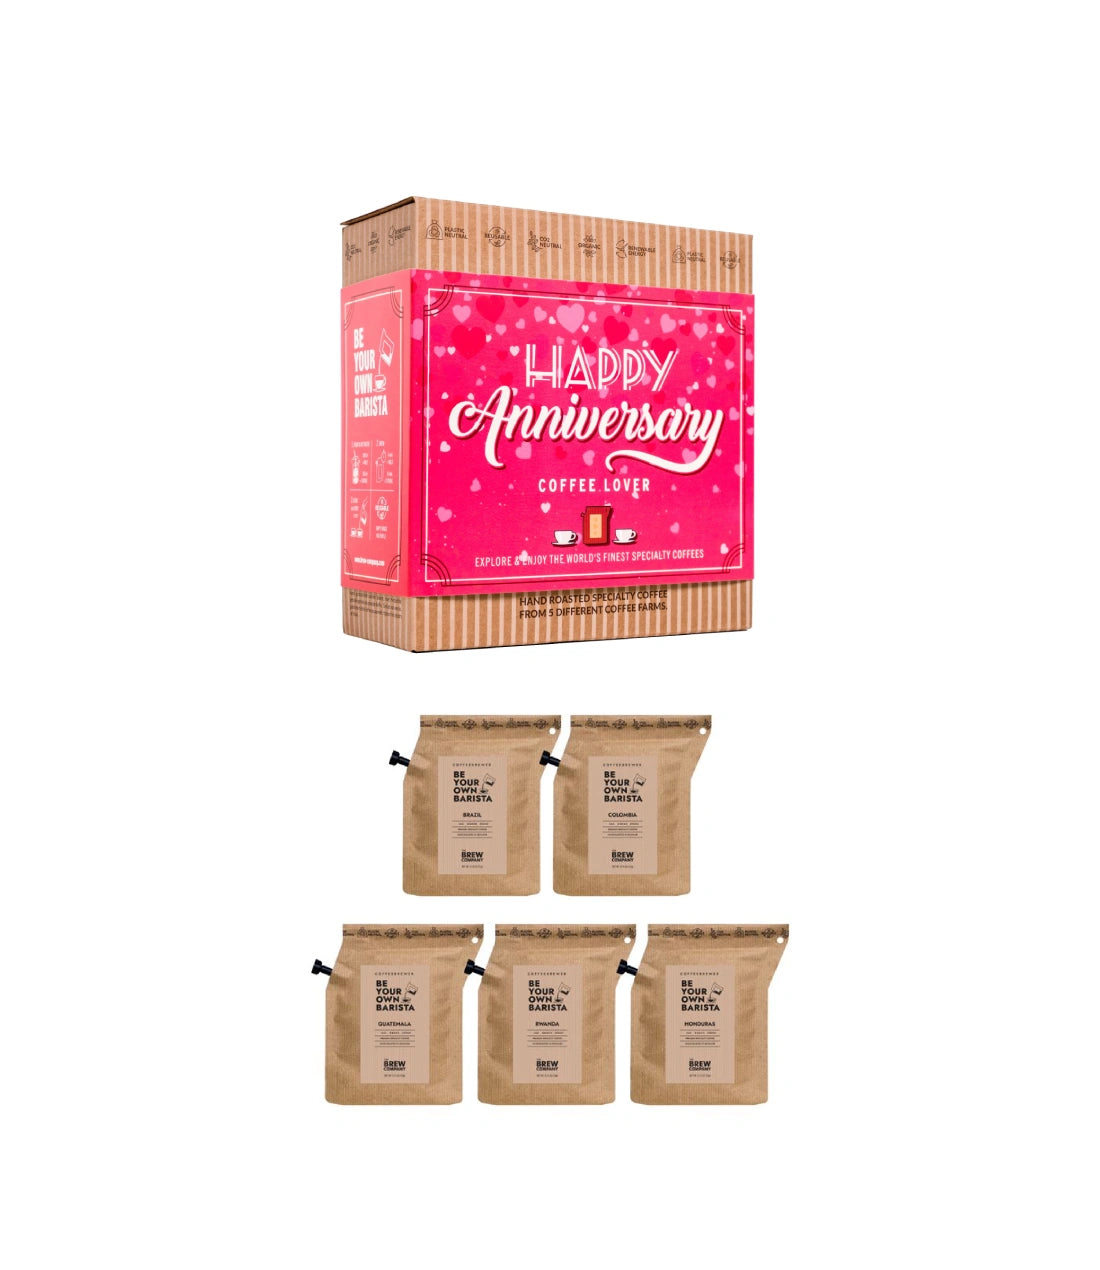 Kavos dovanų rinkinys Coffeebrewer Happy Anniversary (Pink)